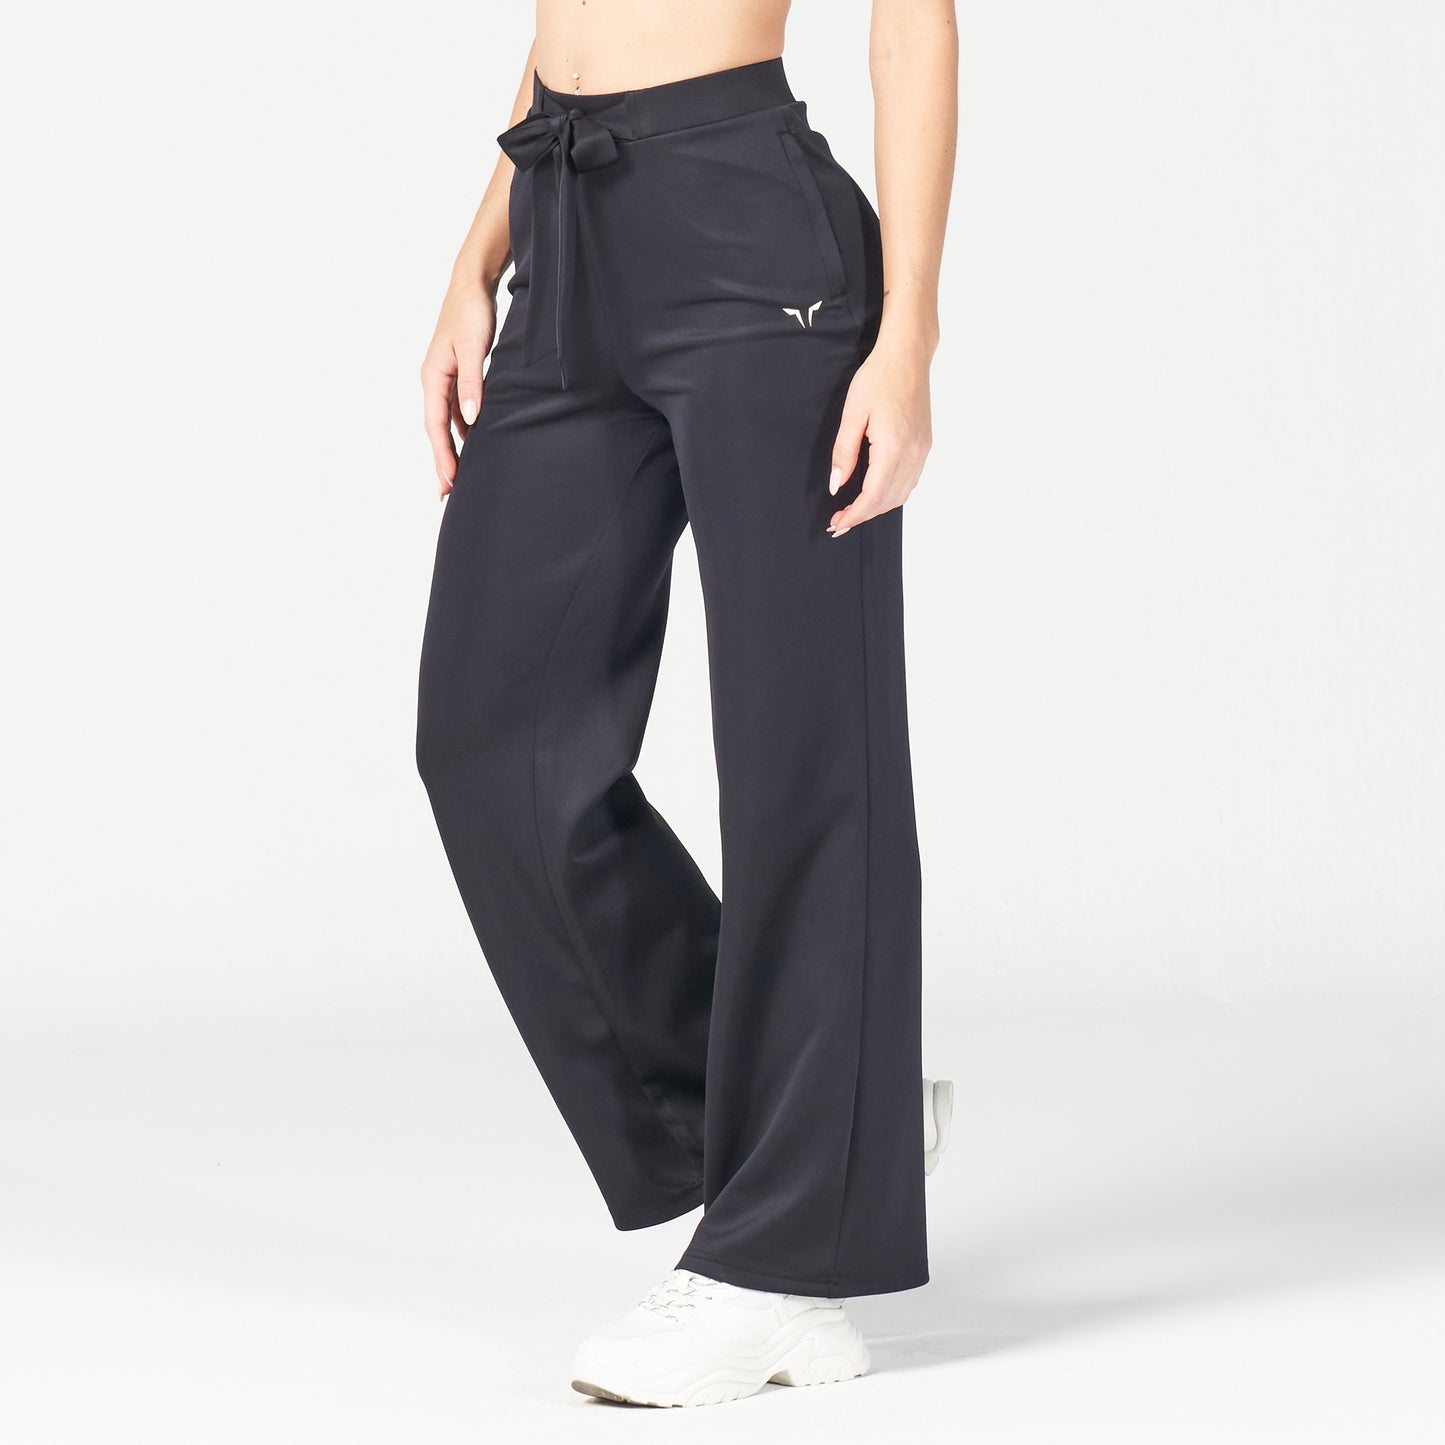 Calvin Klein Women's Seam-Detail Stretch Pants Black Black • Price »